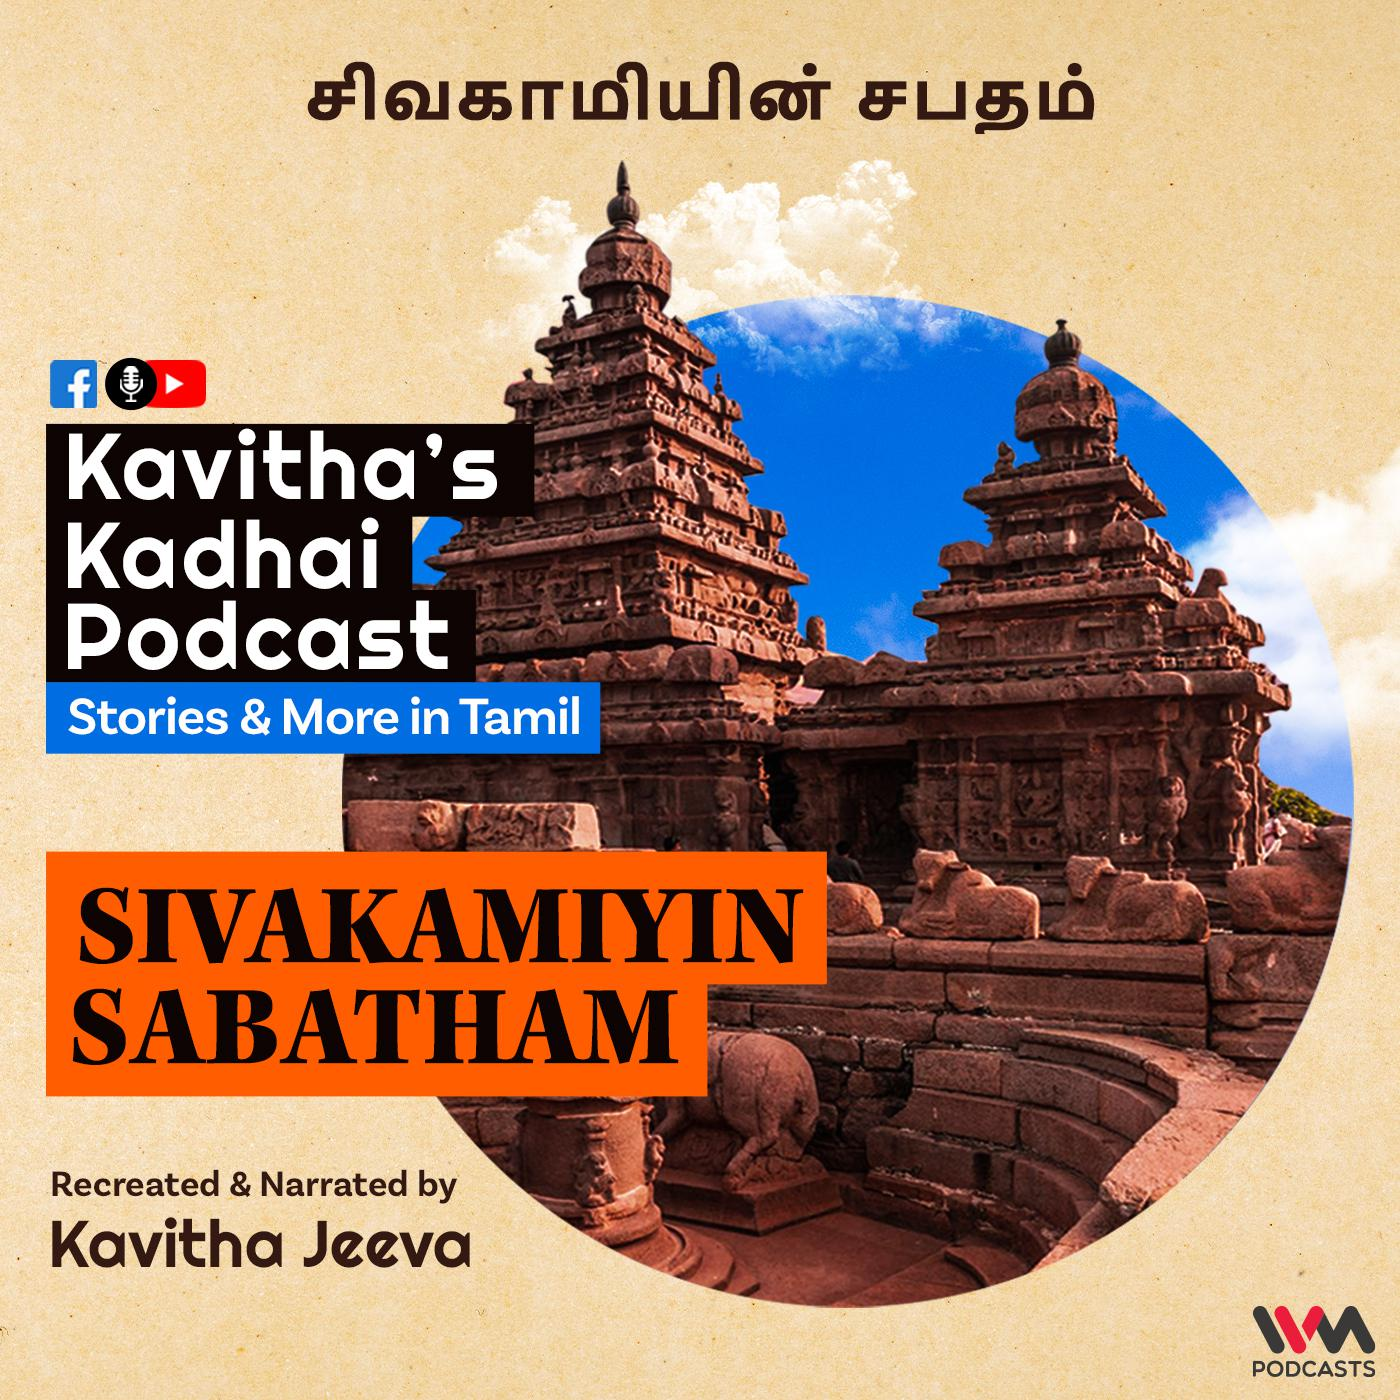 KadhaiPodcast's Sivakamiyin Sabatham with Kavitha Jeeva - Episode #136